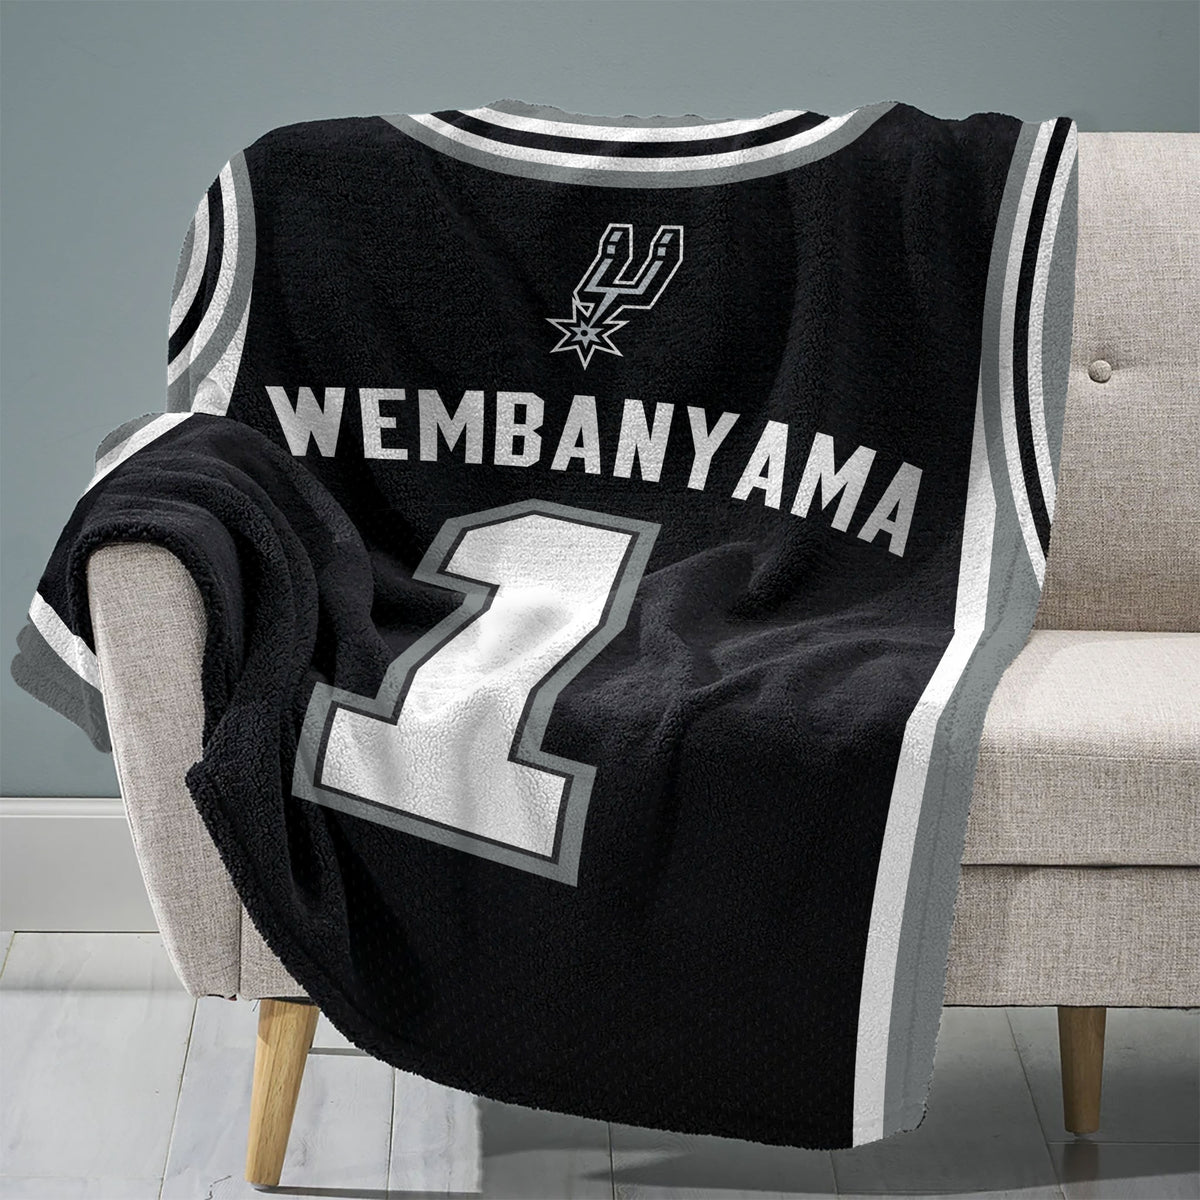 San Antonio Spurs Victor Wembanyama 60” x 80” Raschel Plush Blanket